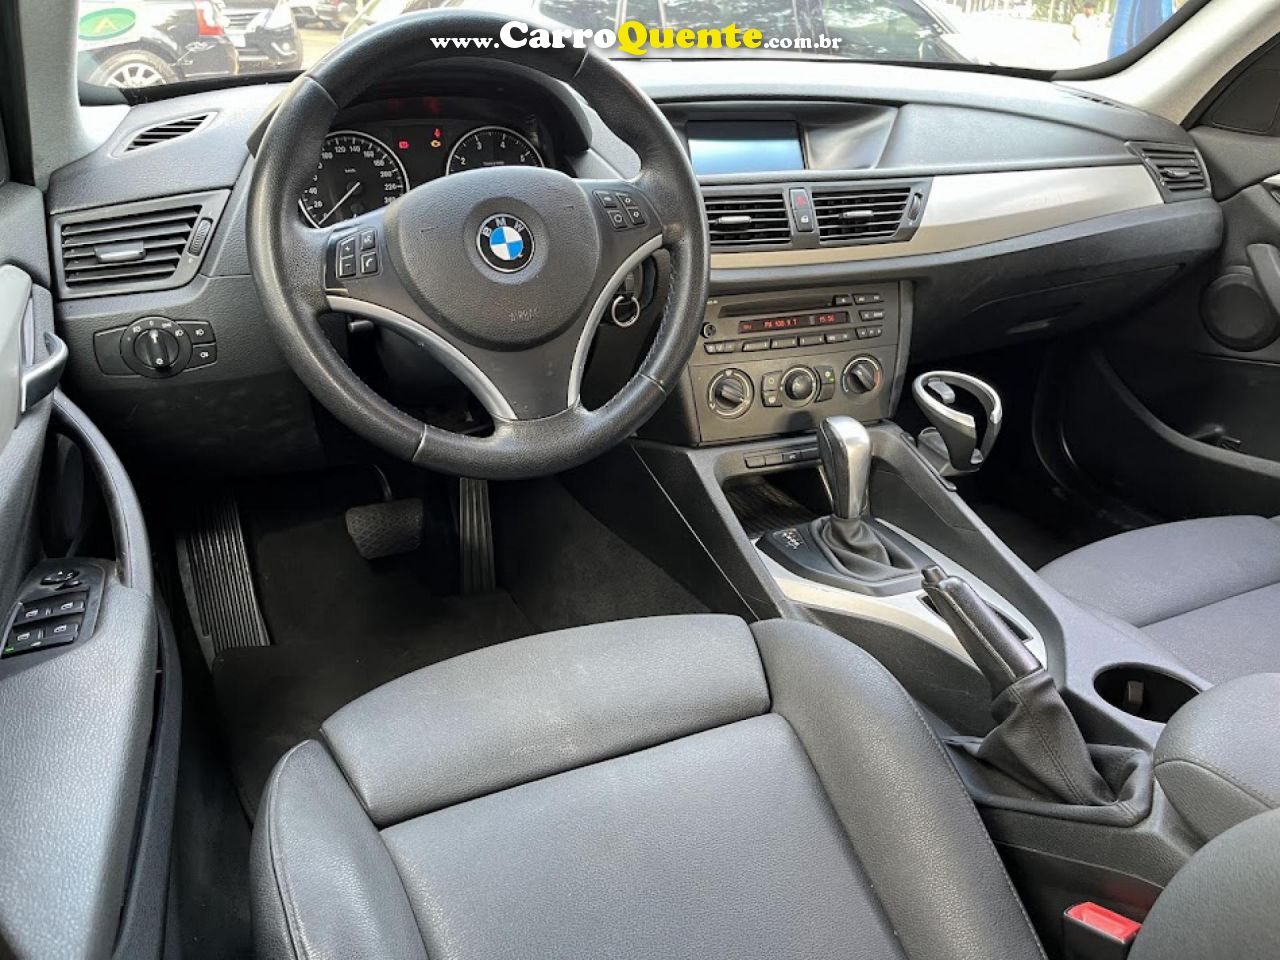 BMW   X1 SDRIVE 18I 2.0 16V 4X2 AUT.   PRETO 2011 2.0 GASOLINA - Loja